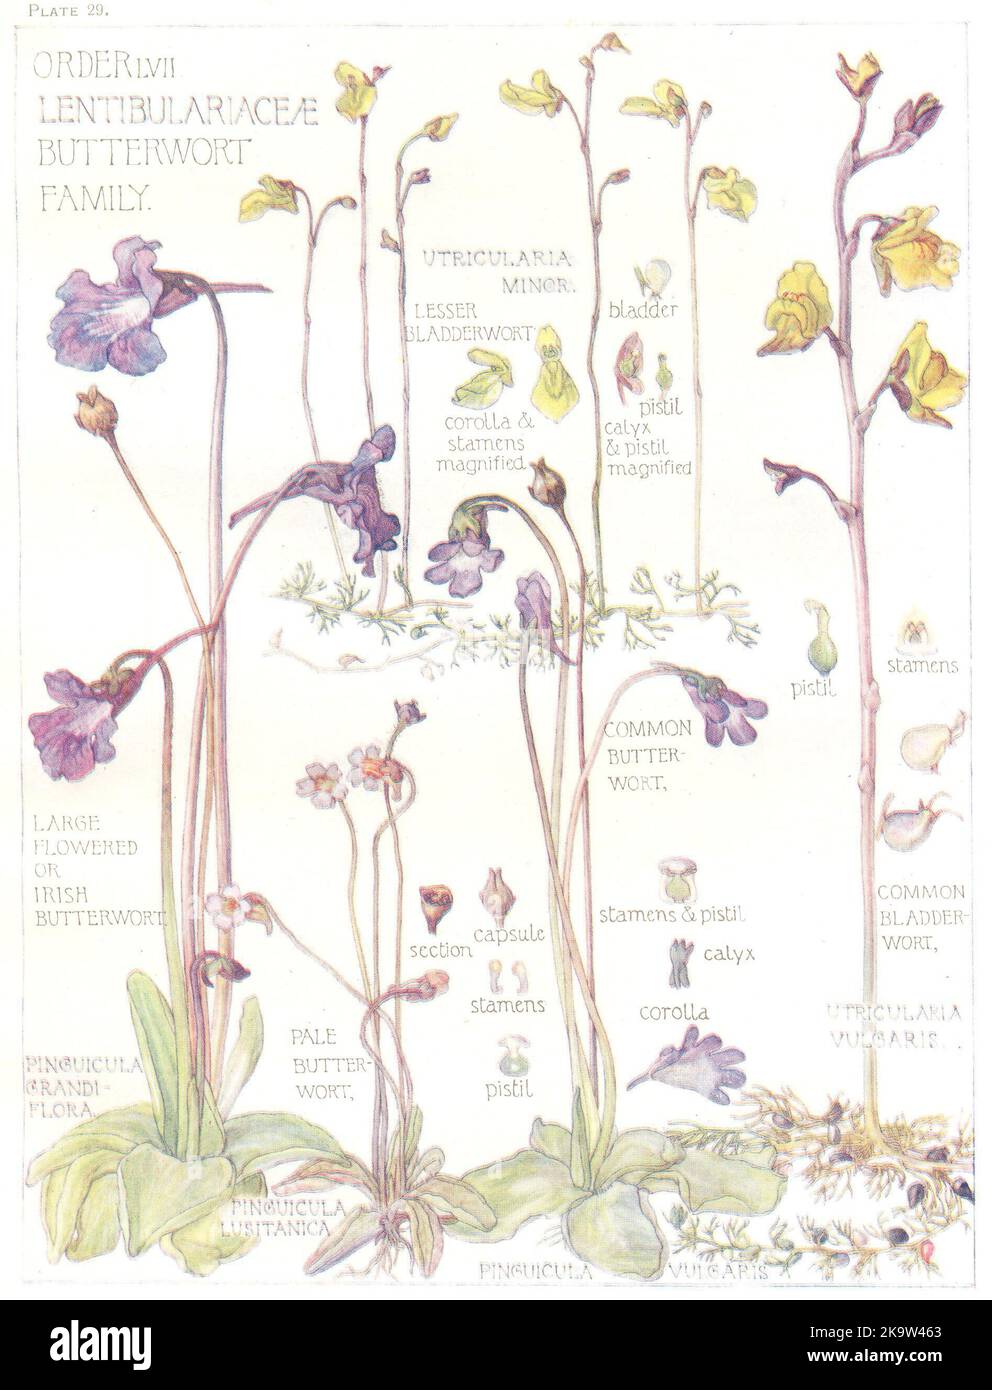 BUTTERWORT. Lesser; Large Flowered Irish; Common; Pale; Bladderwort 1907 print Stock Photo